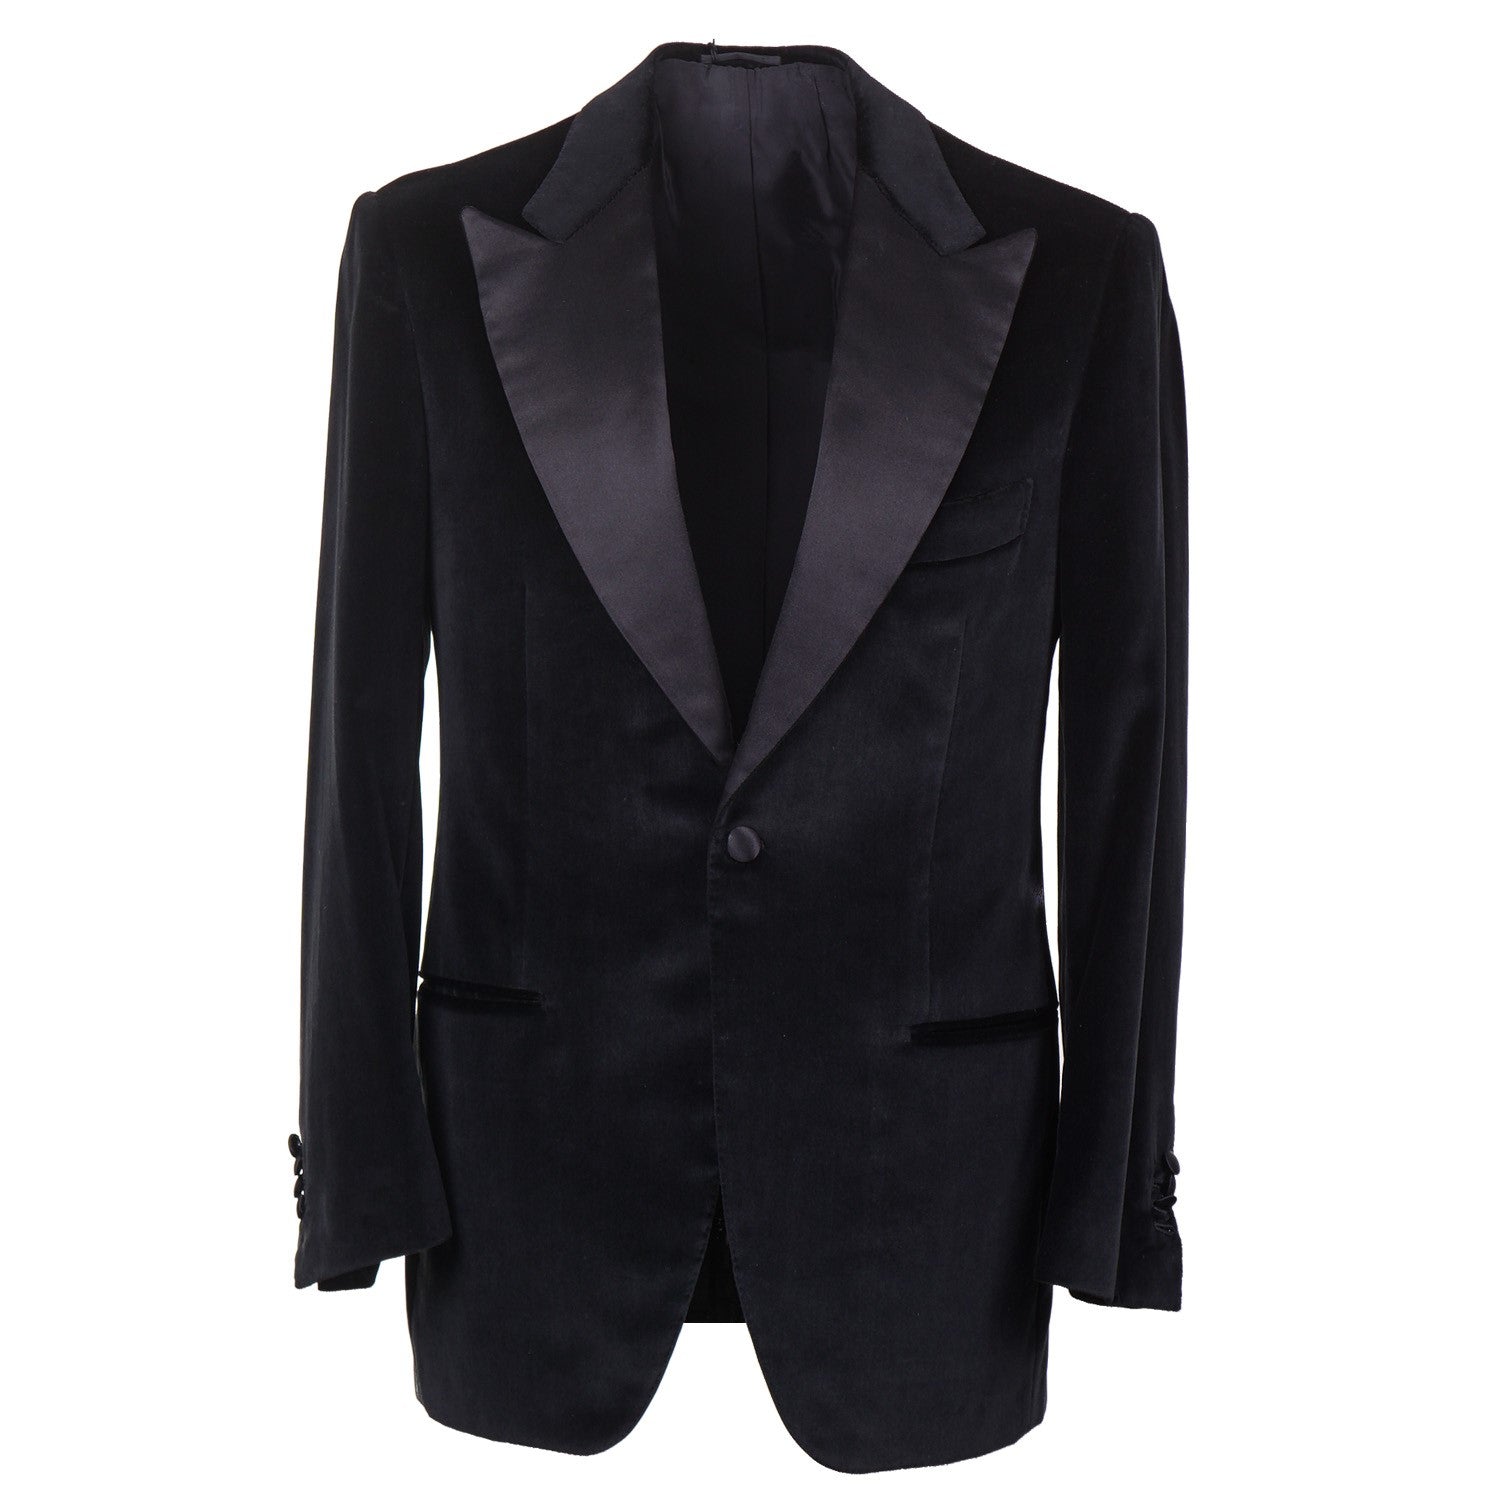 Kiton Black Velvet Tuxedo with Peak Lapels - Top Shelf Apparel